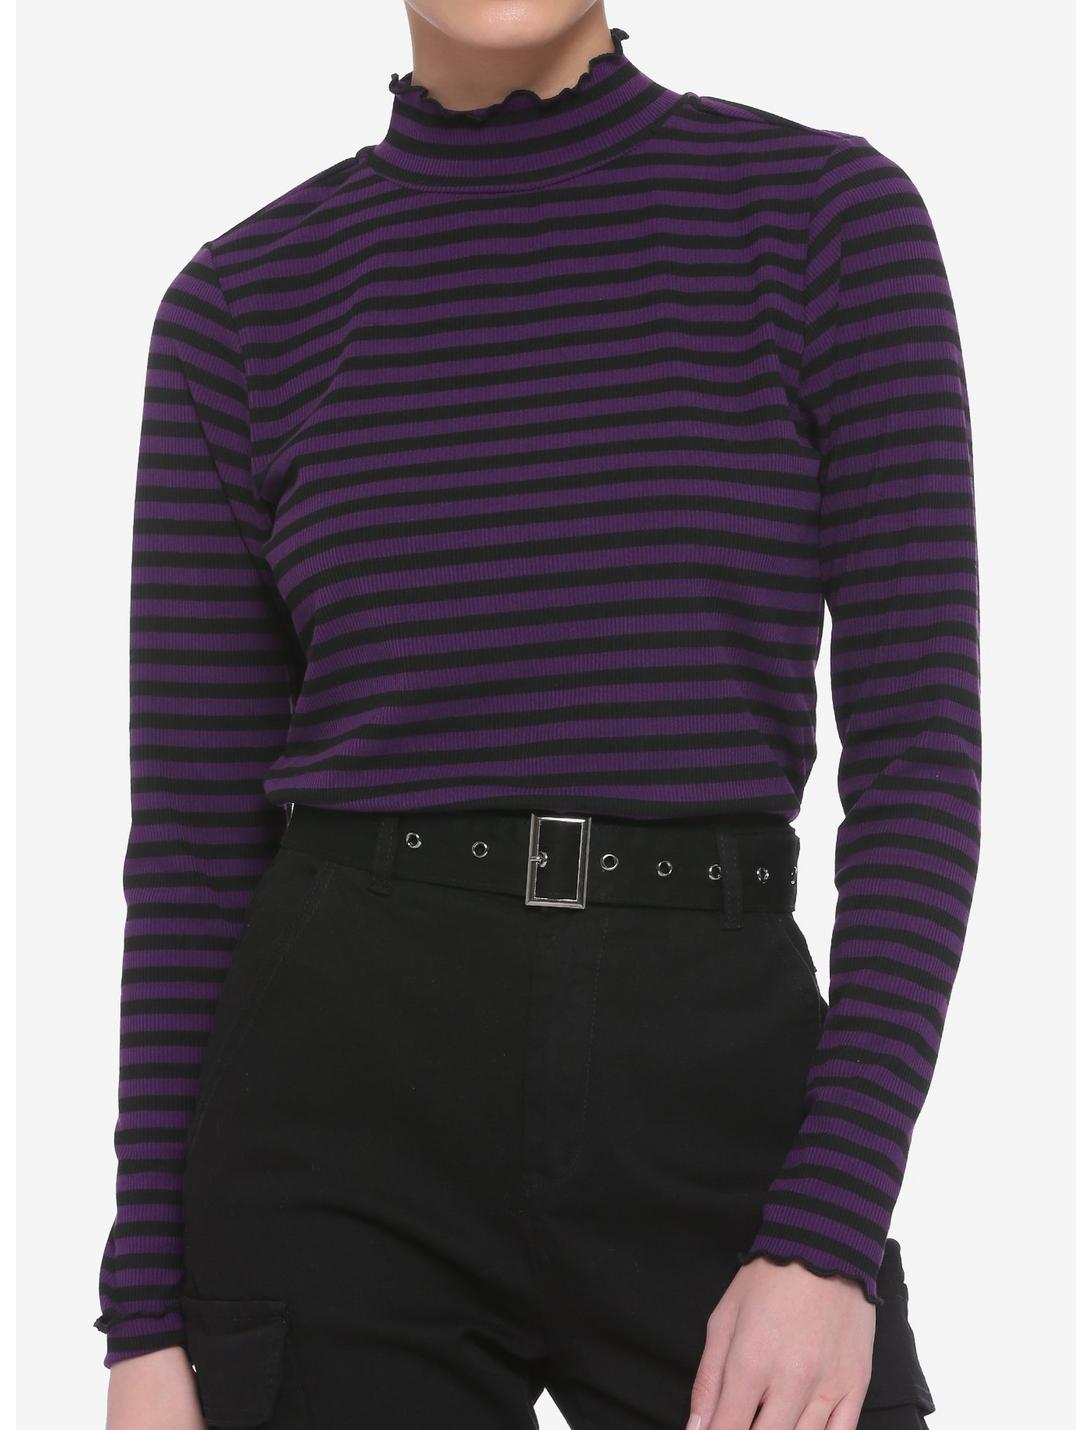 Black & Purple Stripe Mock Neck Girls Long-Sleeve Top, STRIPE - PURPLE, hi-res